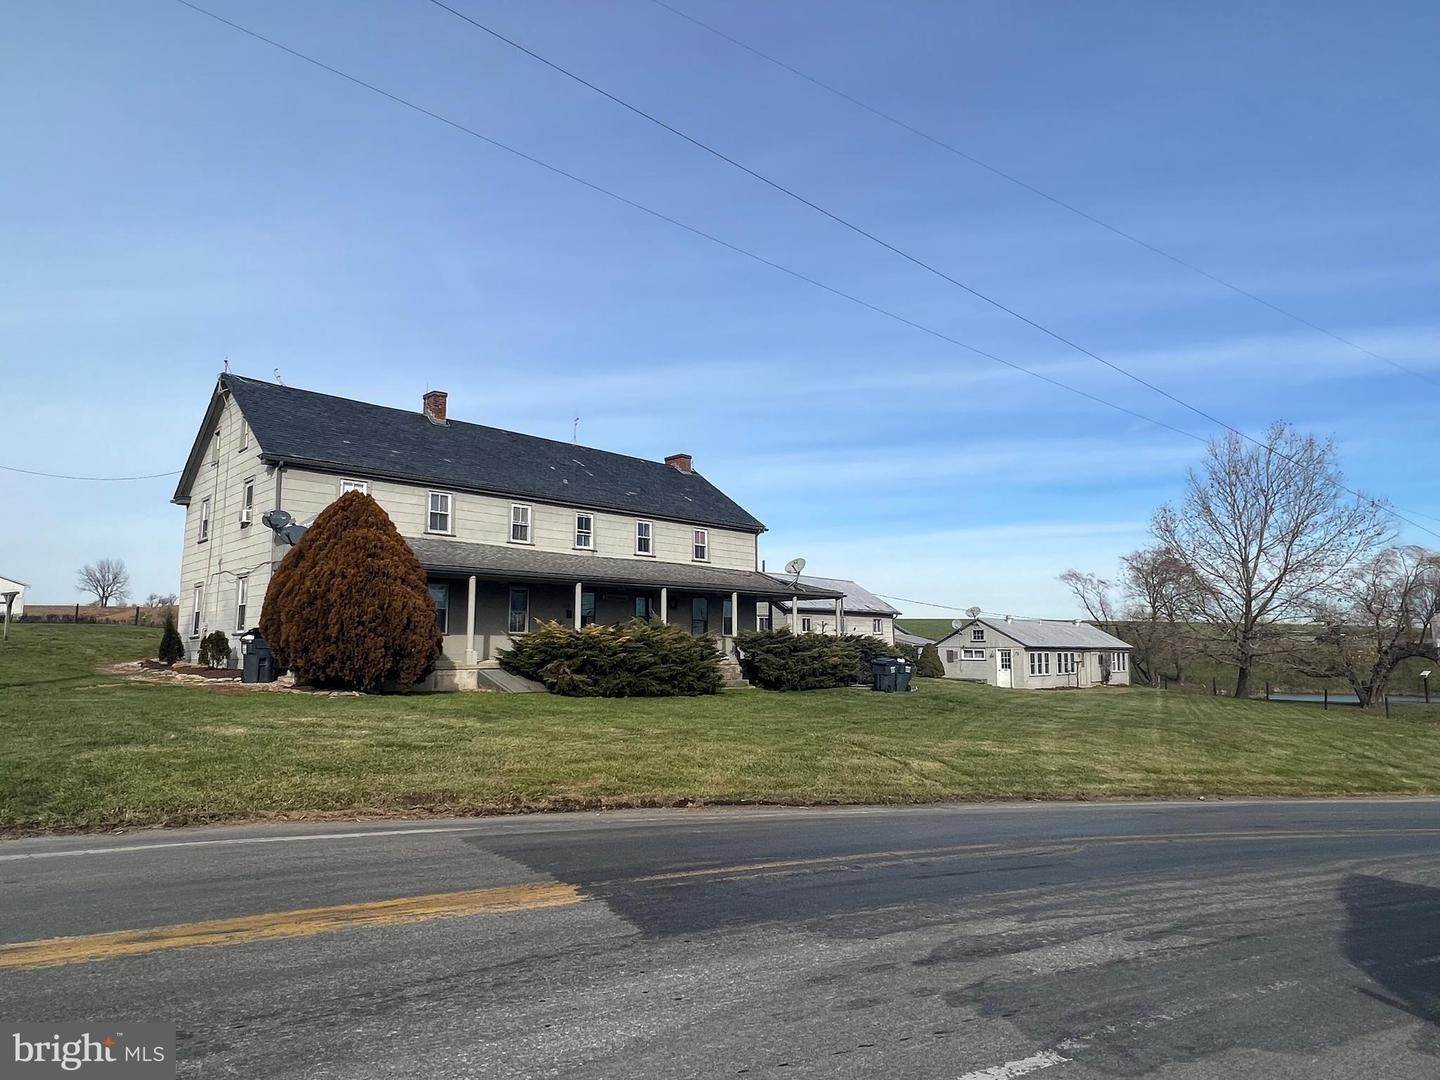 Single Family Homes για την Πώληση στο Kirkwood, Πενσιλβανια 17536 Ηνωμένες Πολιτείες